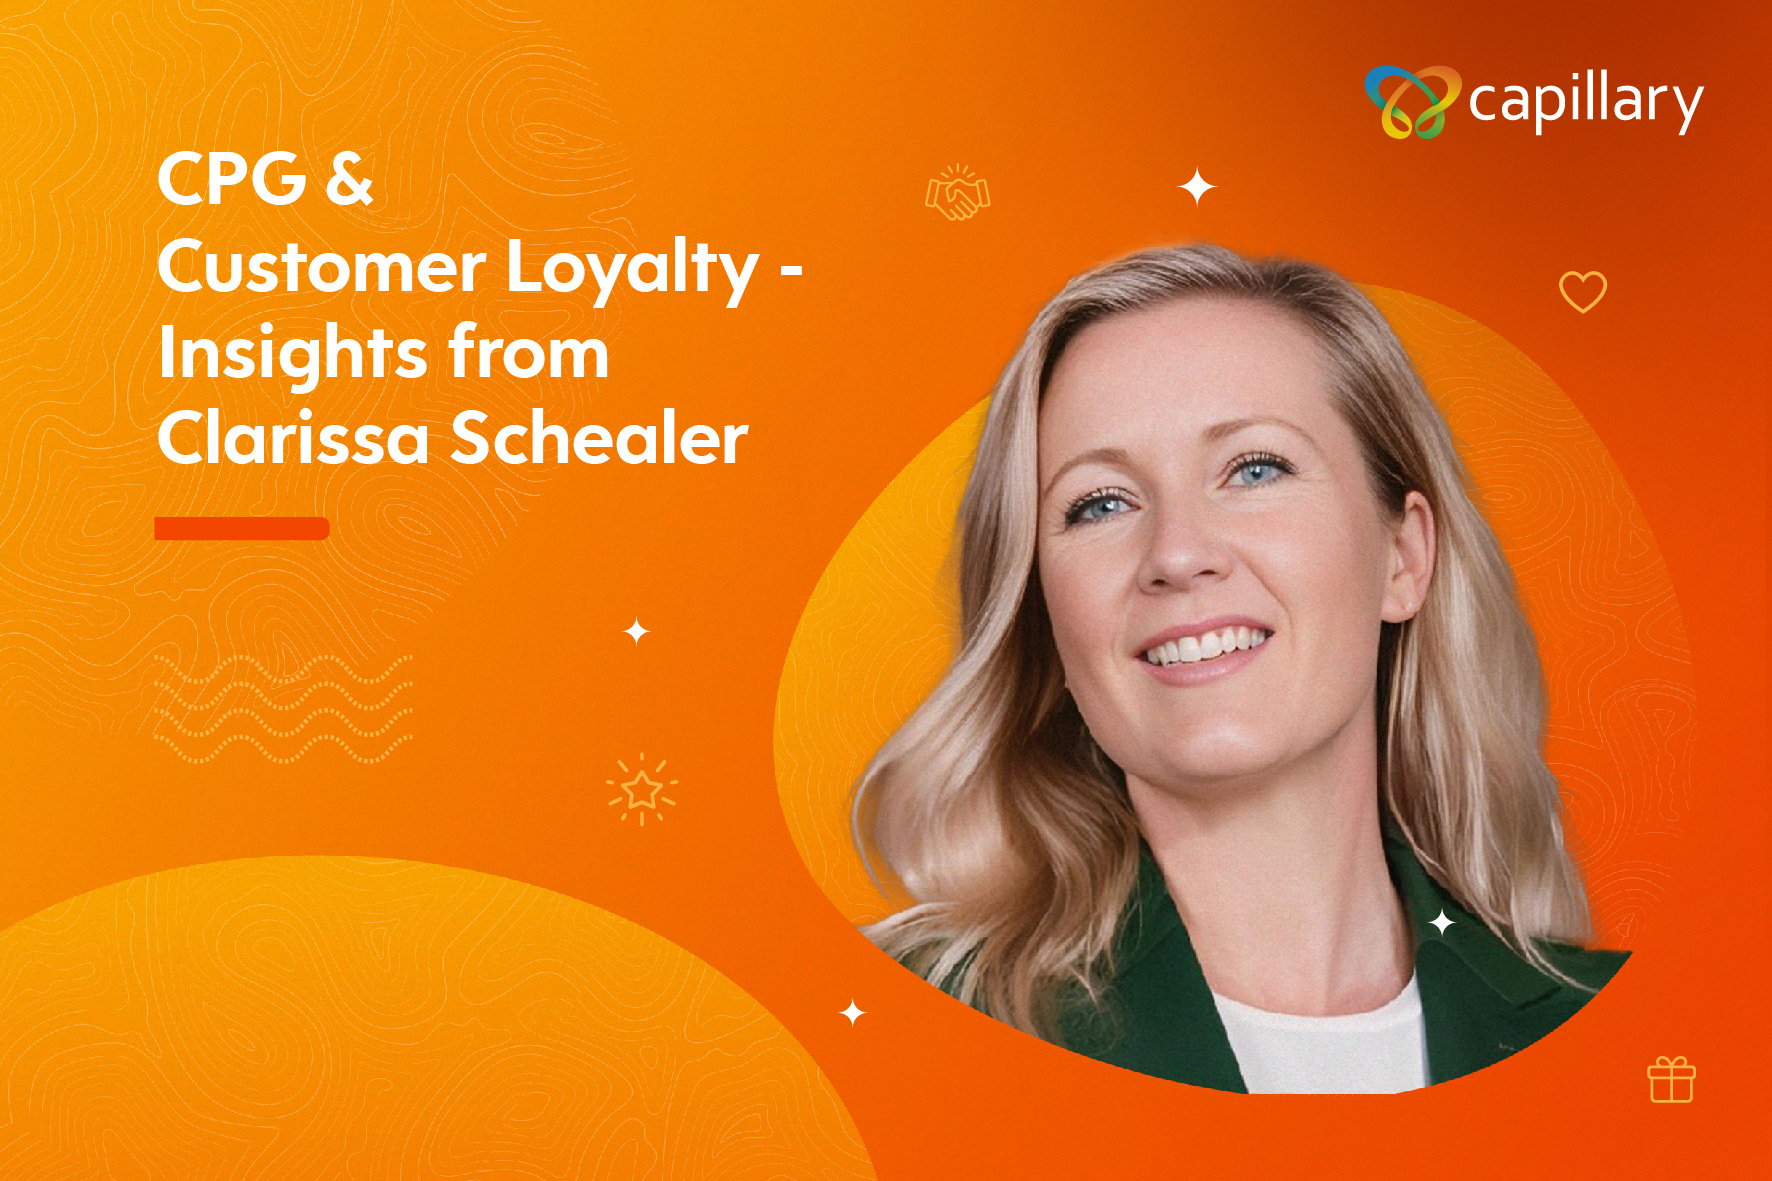 CPG & Customer Loyalty: Insights from Clarissa Schealer